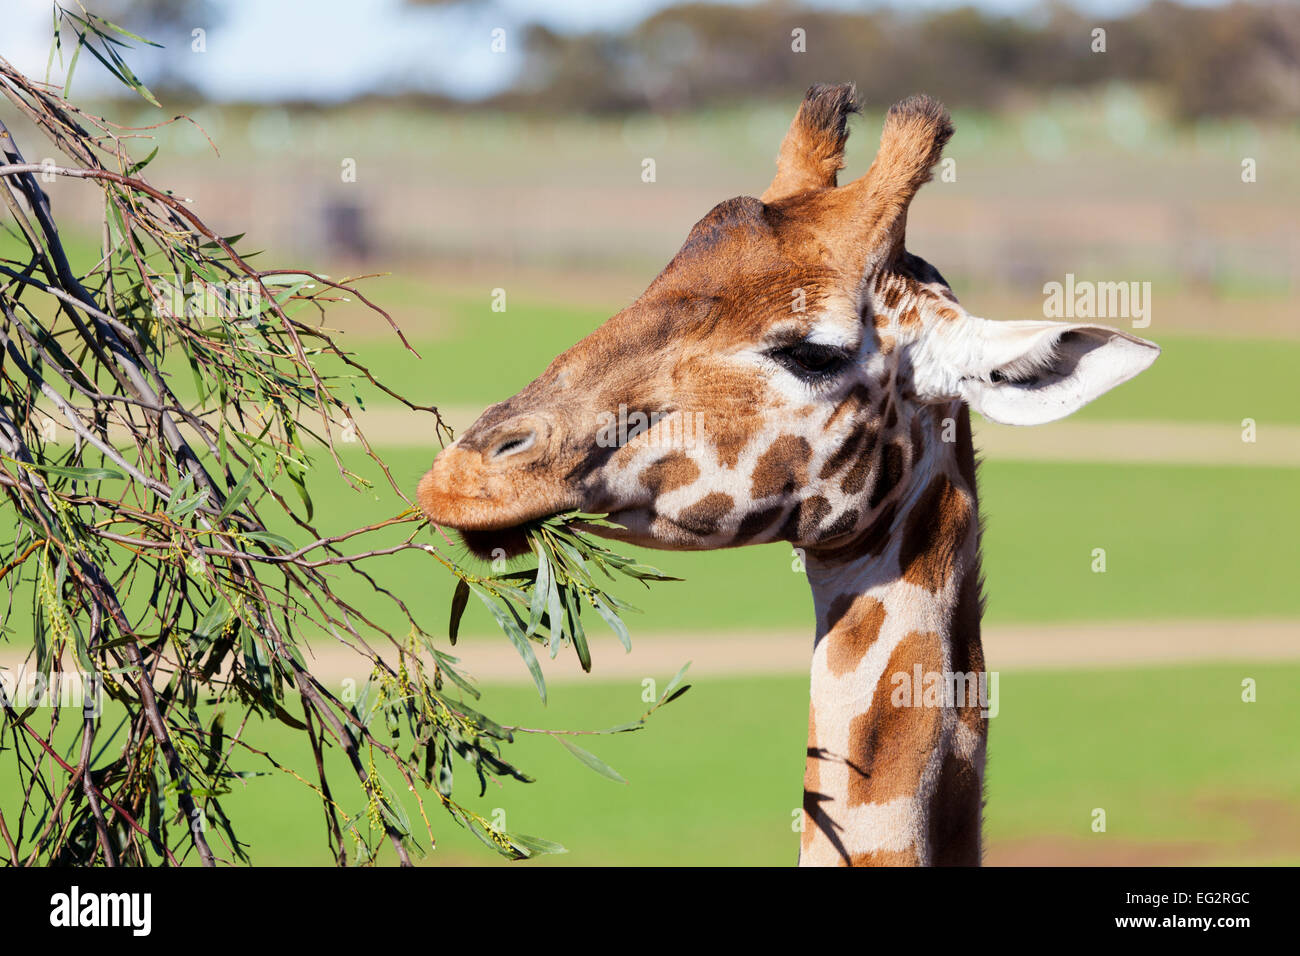 Giraffe reaching high to eat leaves Stock Photo